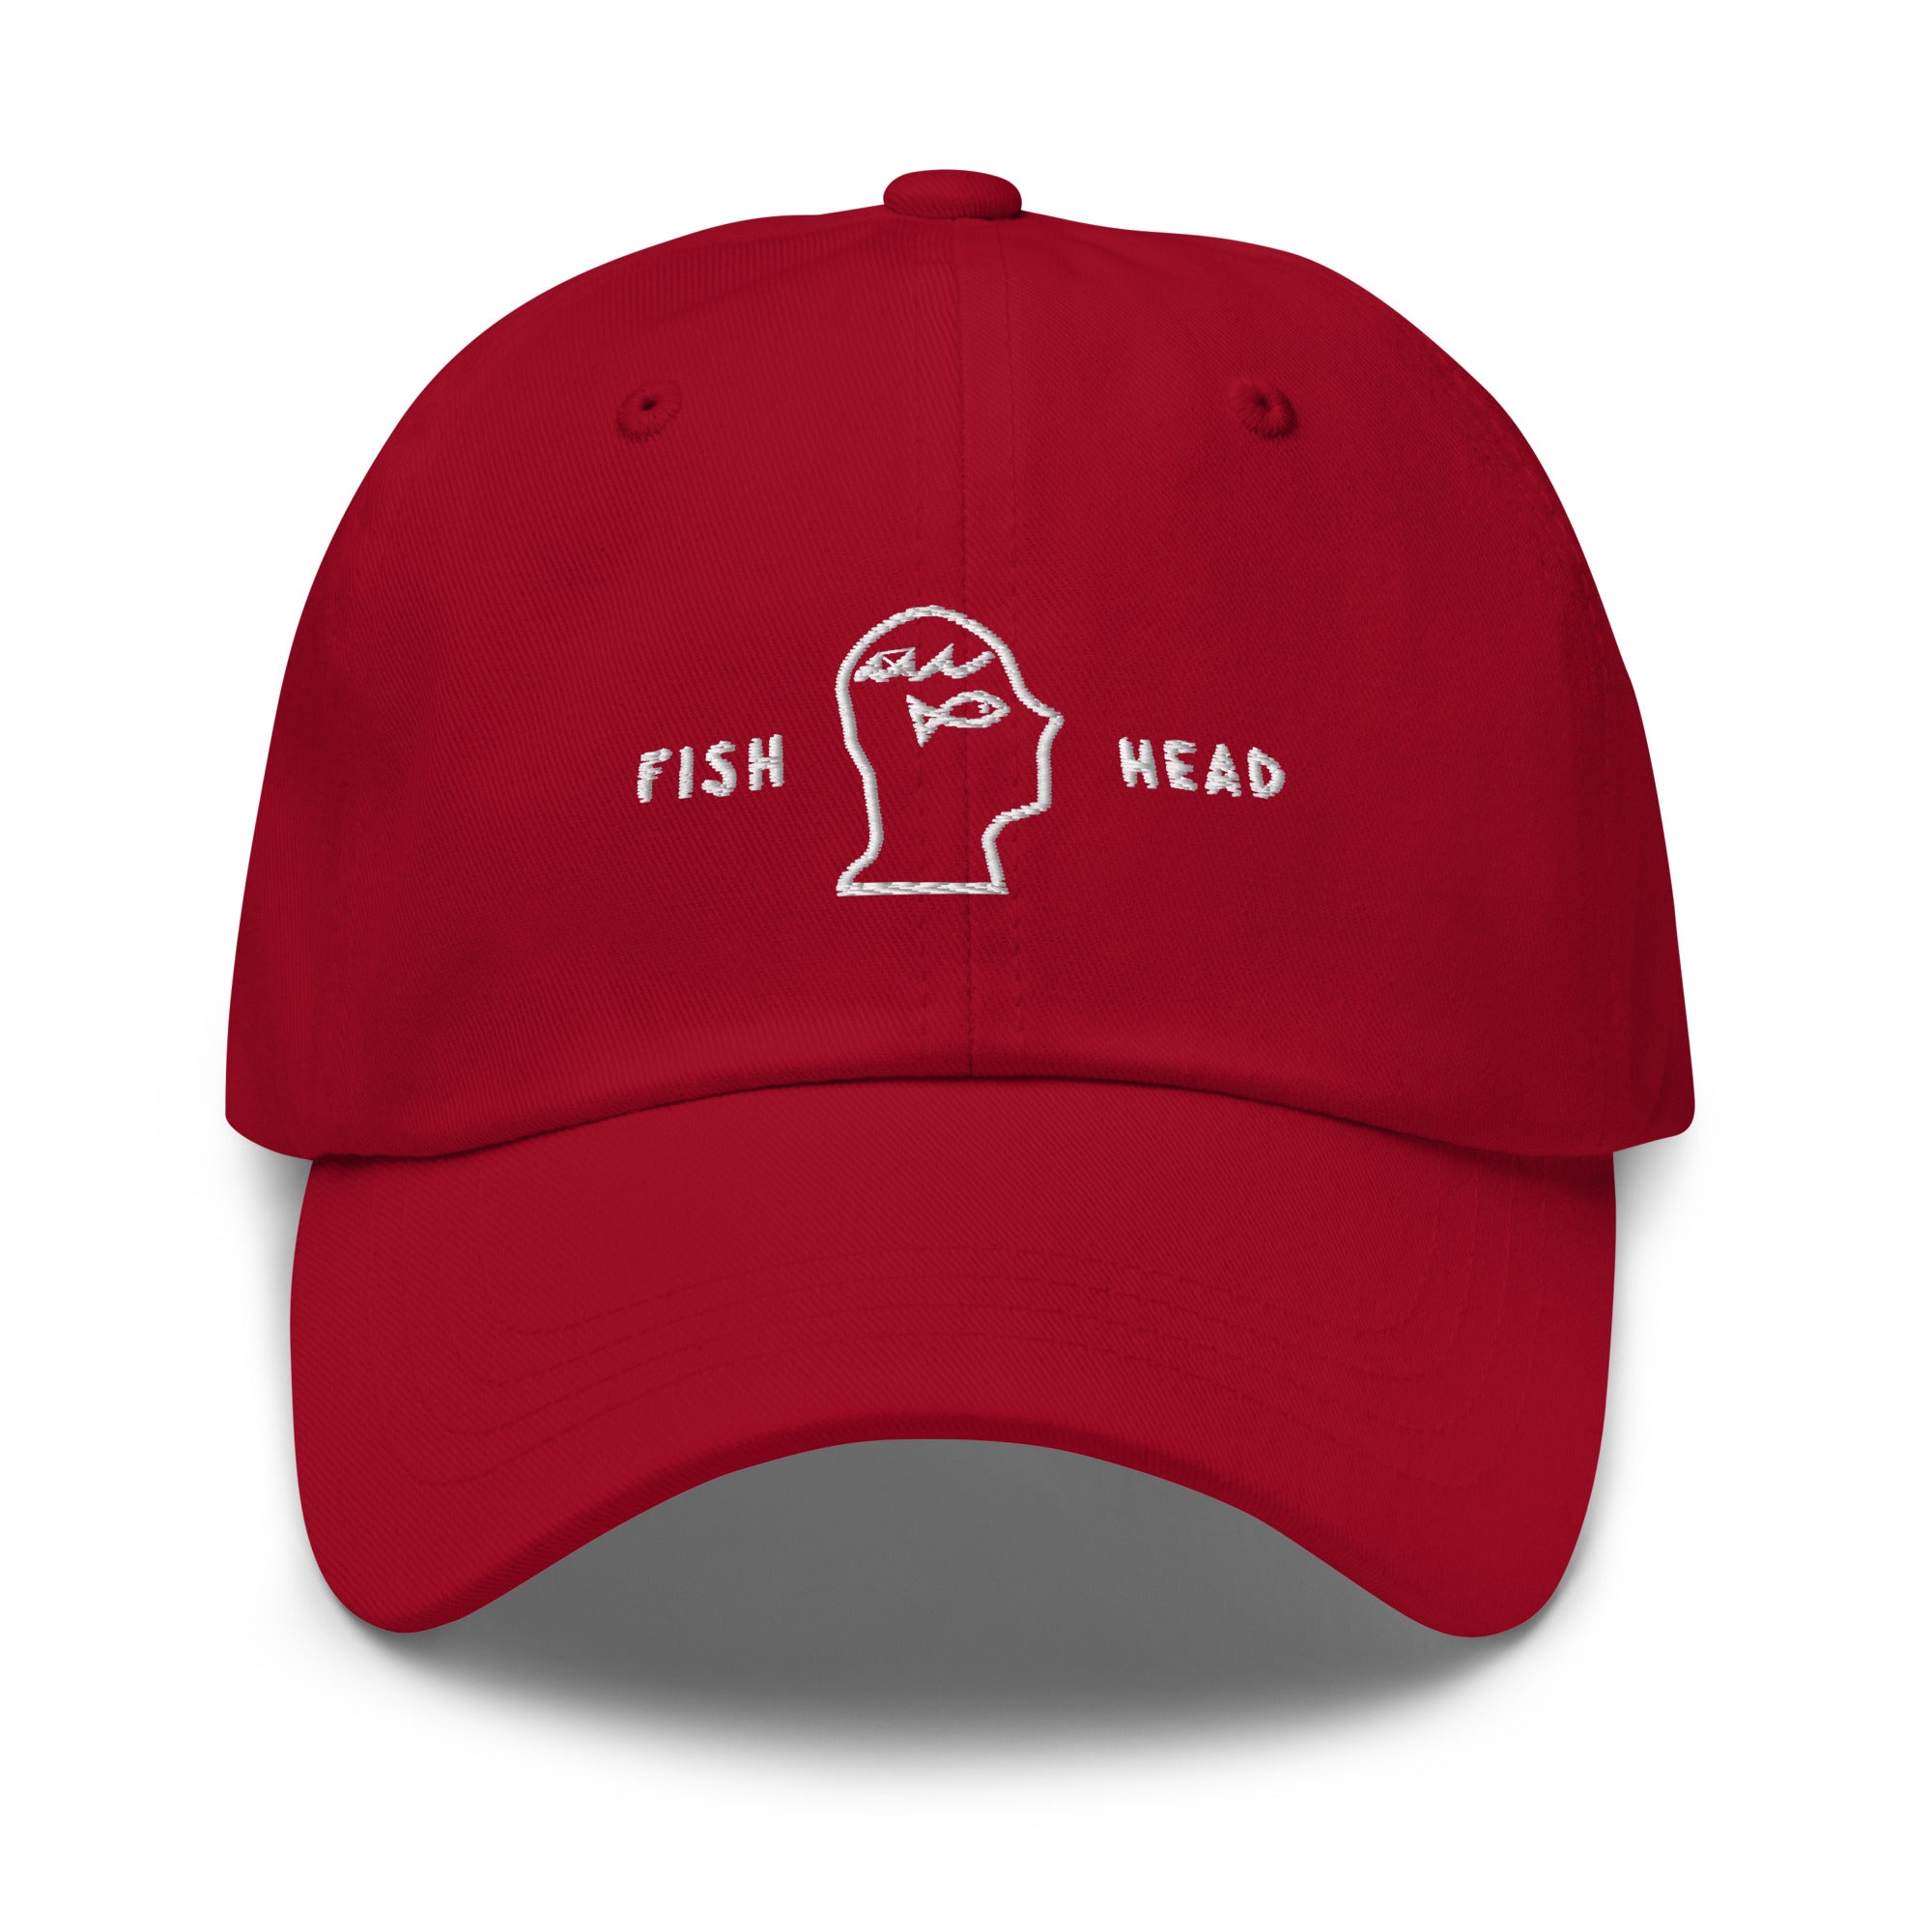 Gone Fishing dad hat – Oddhook